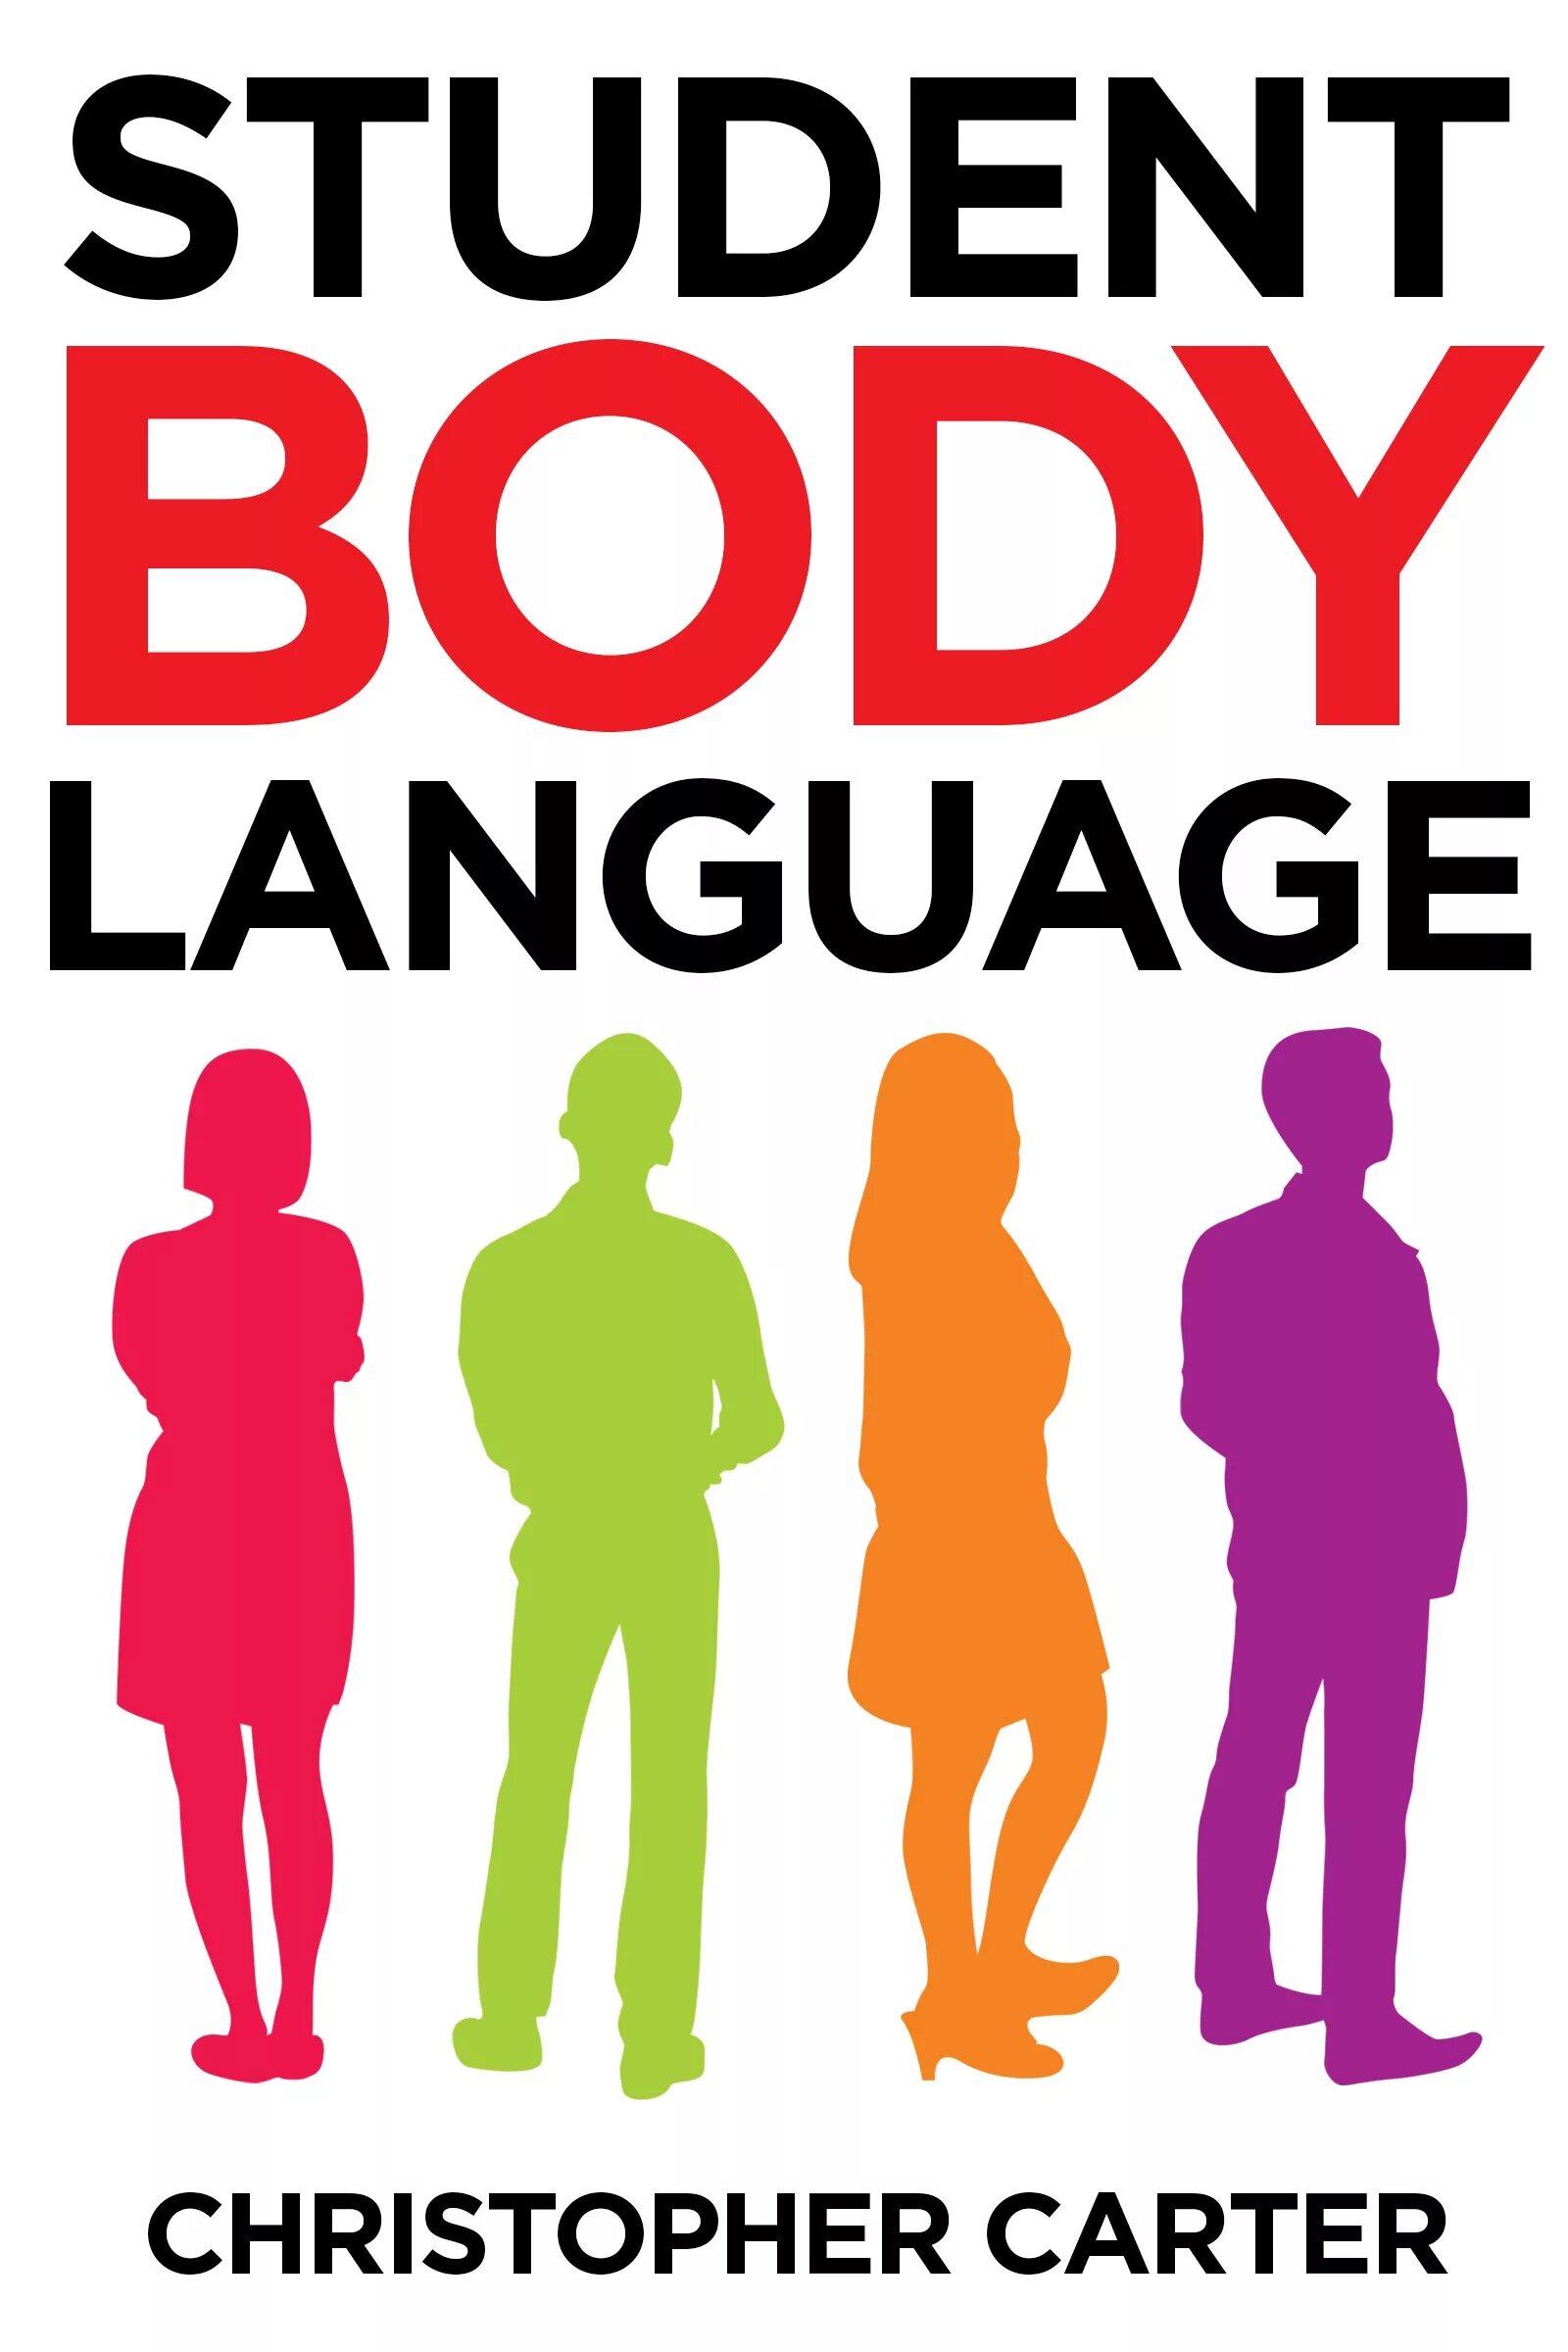 Student body. Body language. How to read body language. Body language book. Студенческие тела.